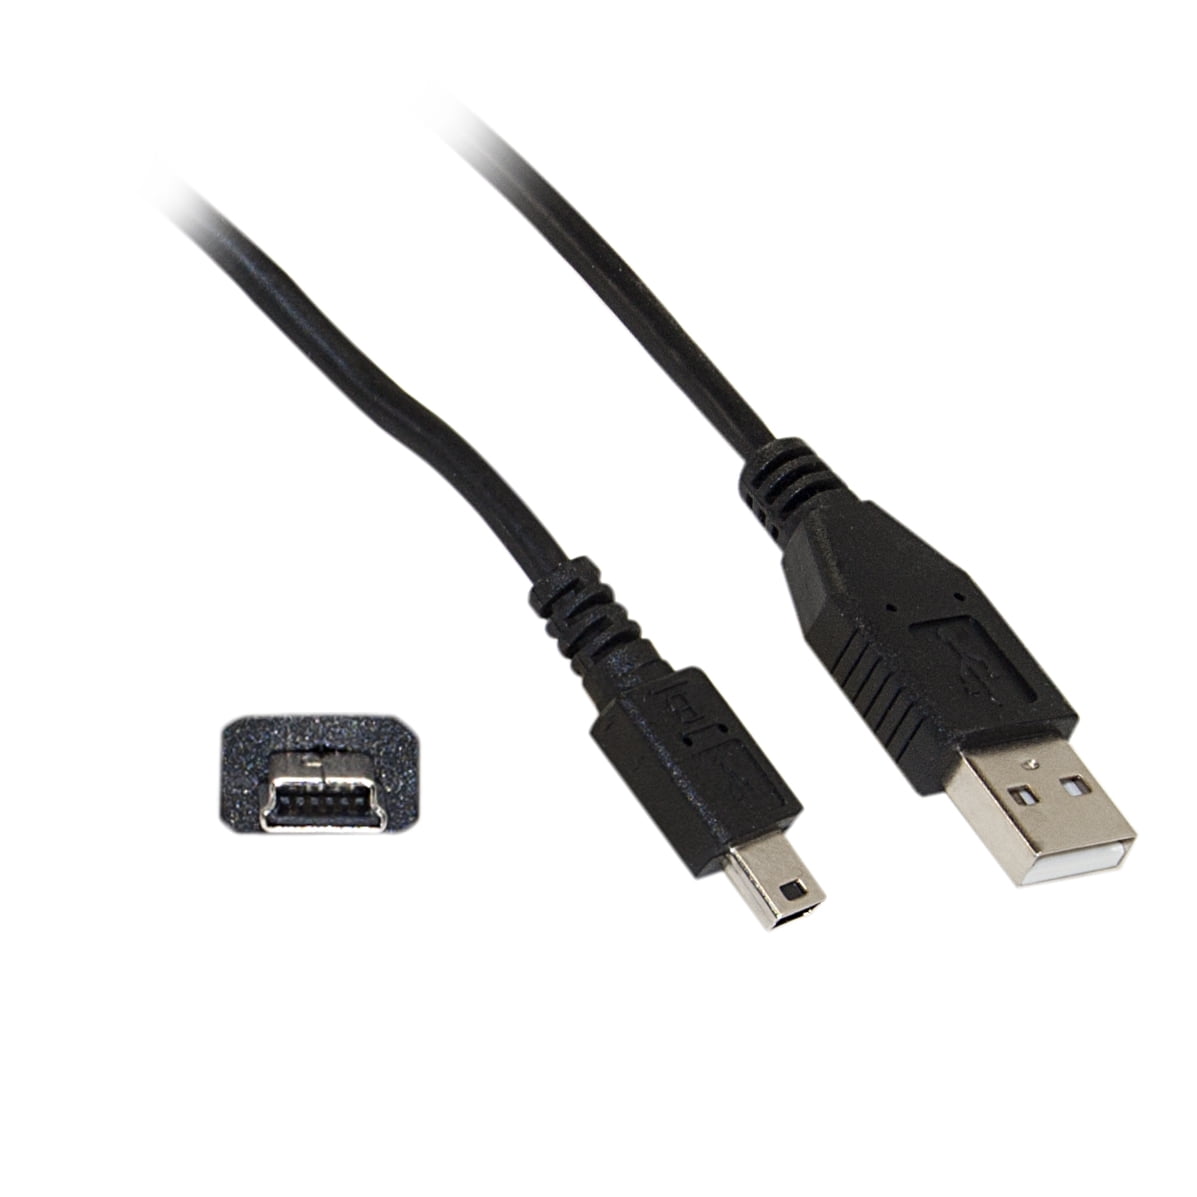 Mini USB 2.0 Cable, Black, Type Male to 5 Male Walmart.com